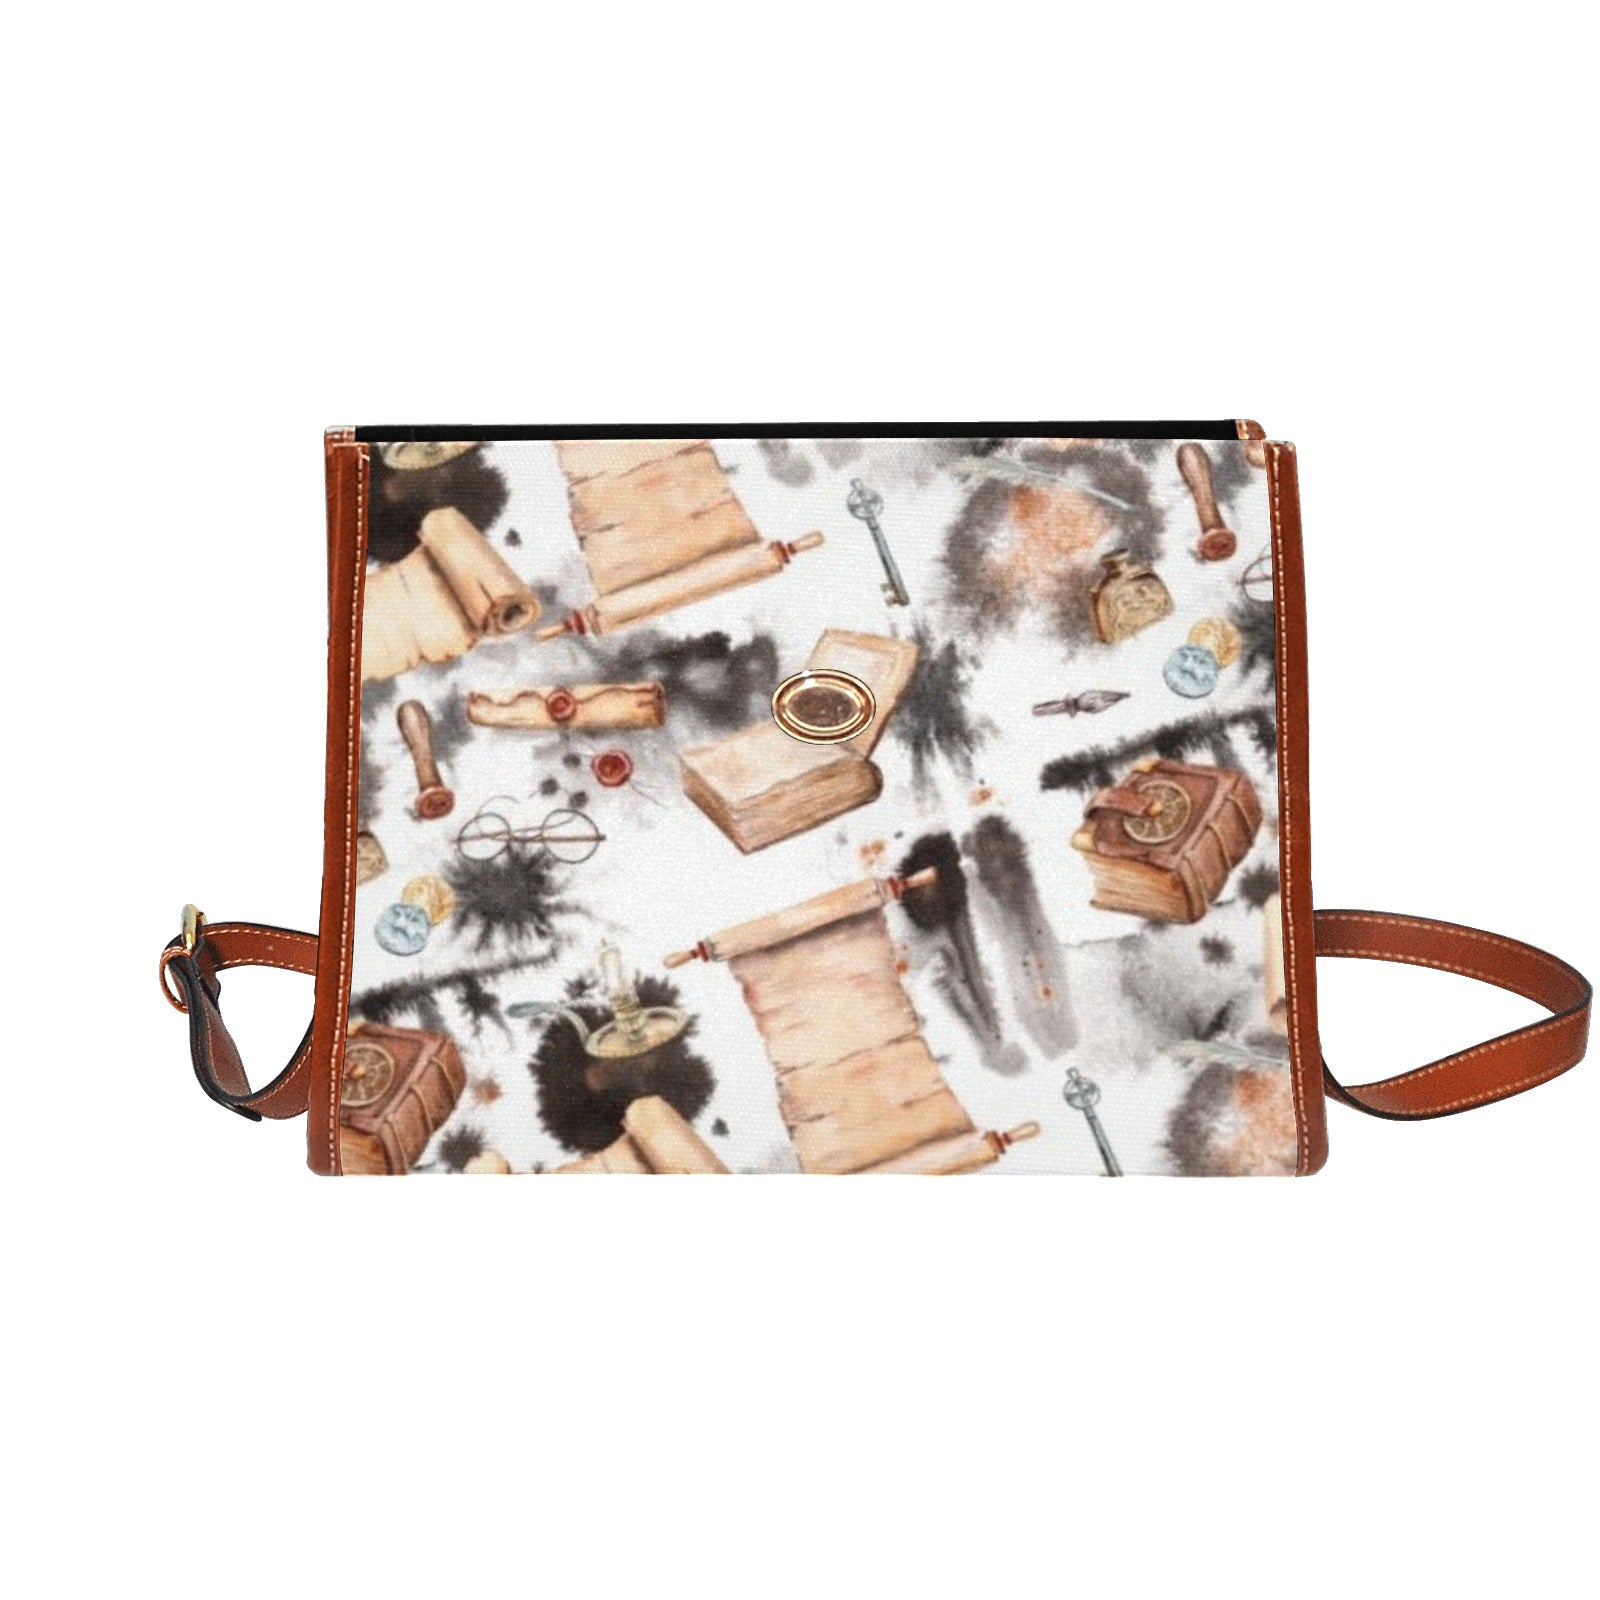 Author - Waterproof Canvas Handbag